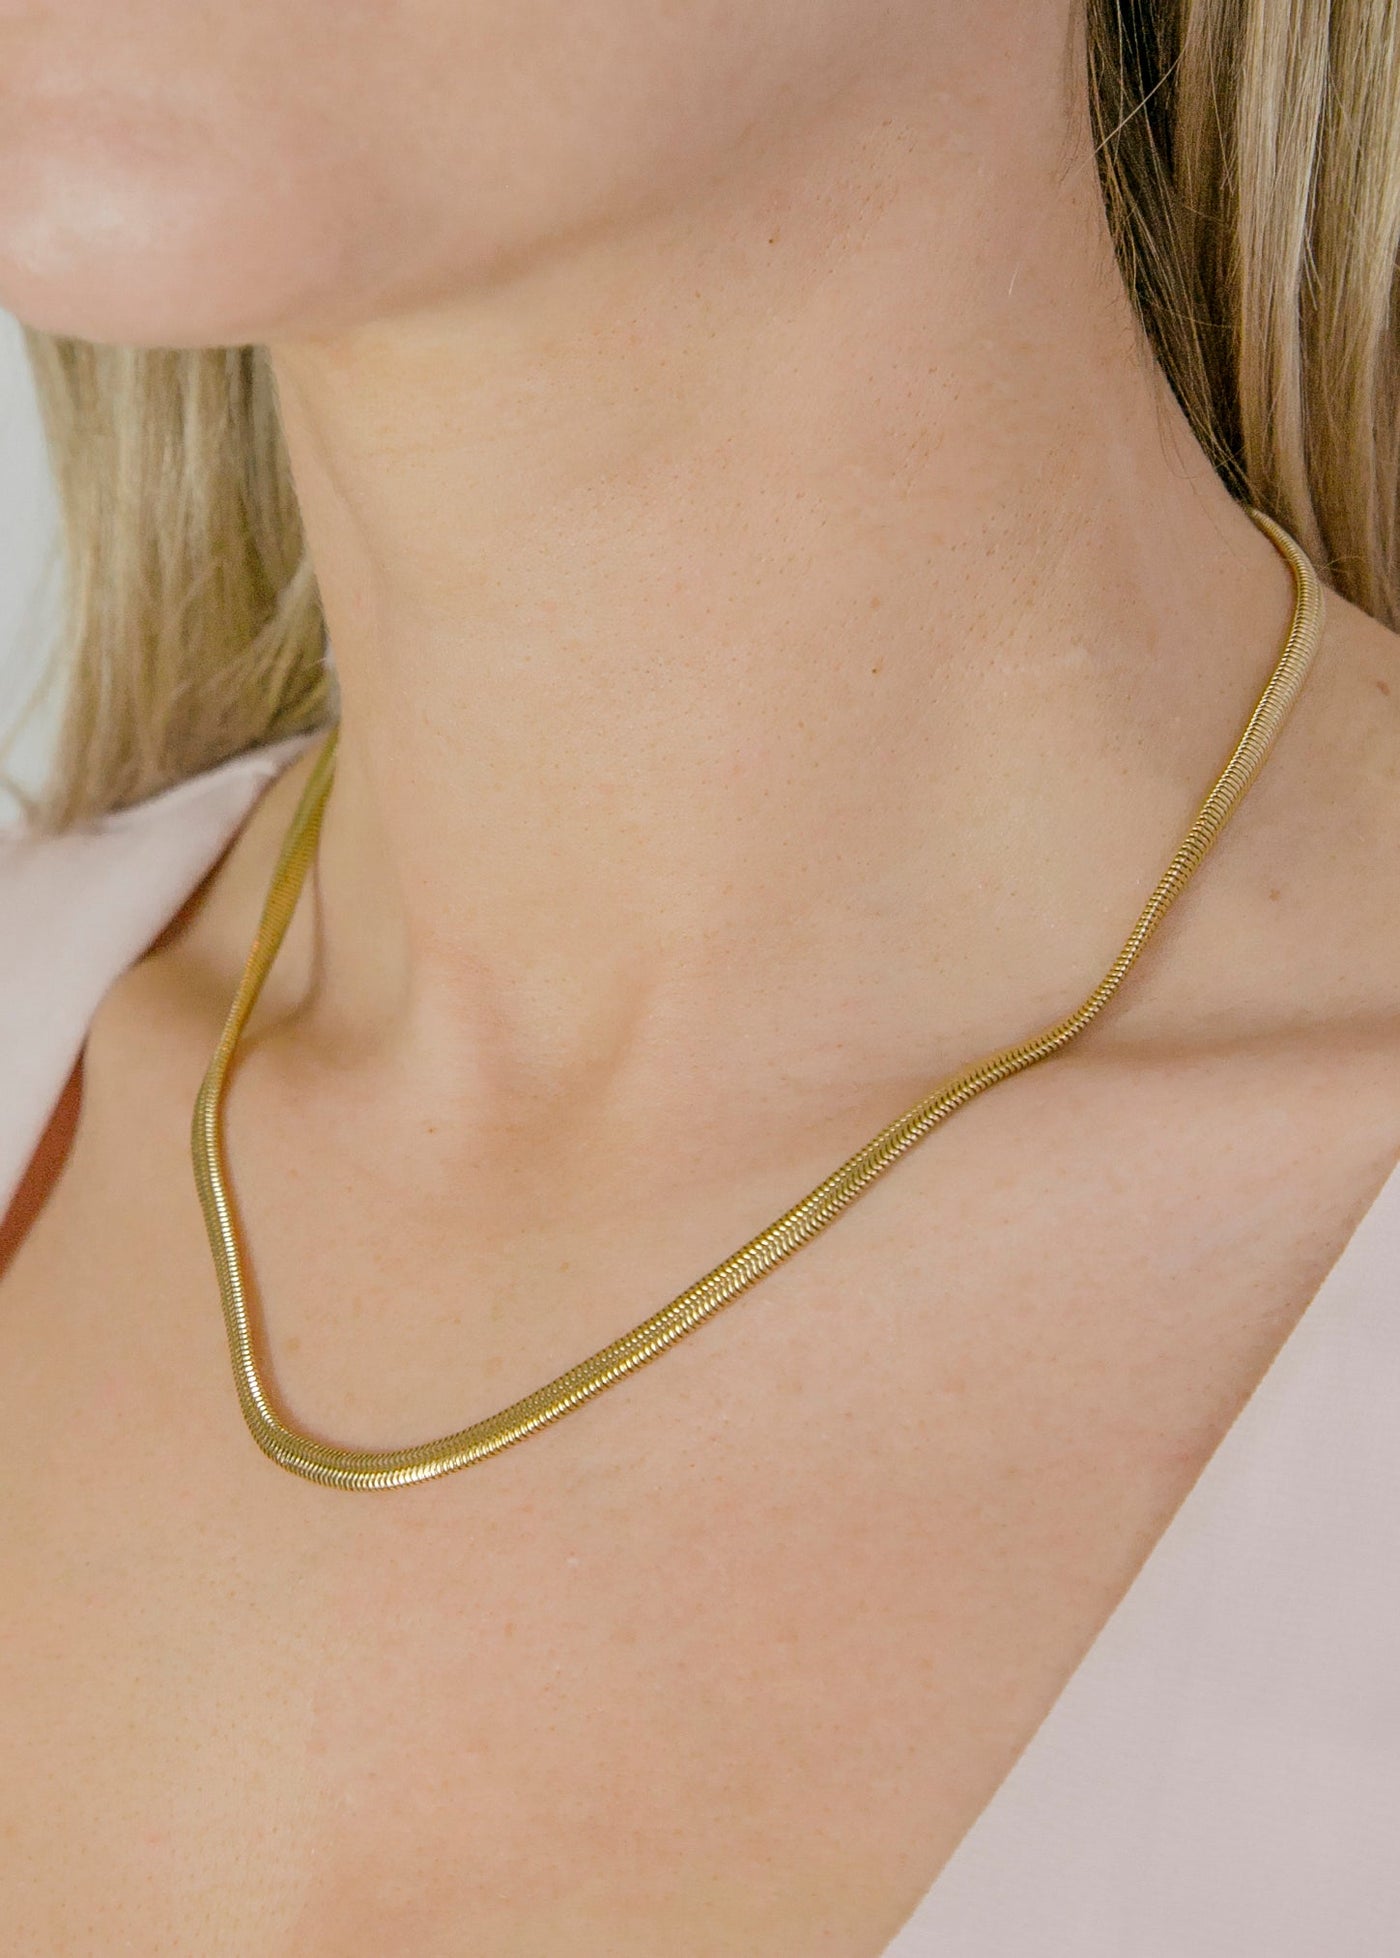 Flat Herringbone Snake Chain (Hailey Bieber necklace) - Maids to Measure